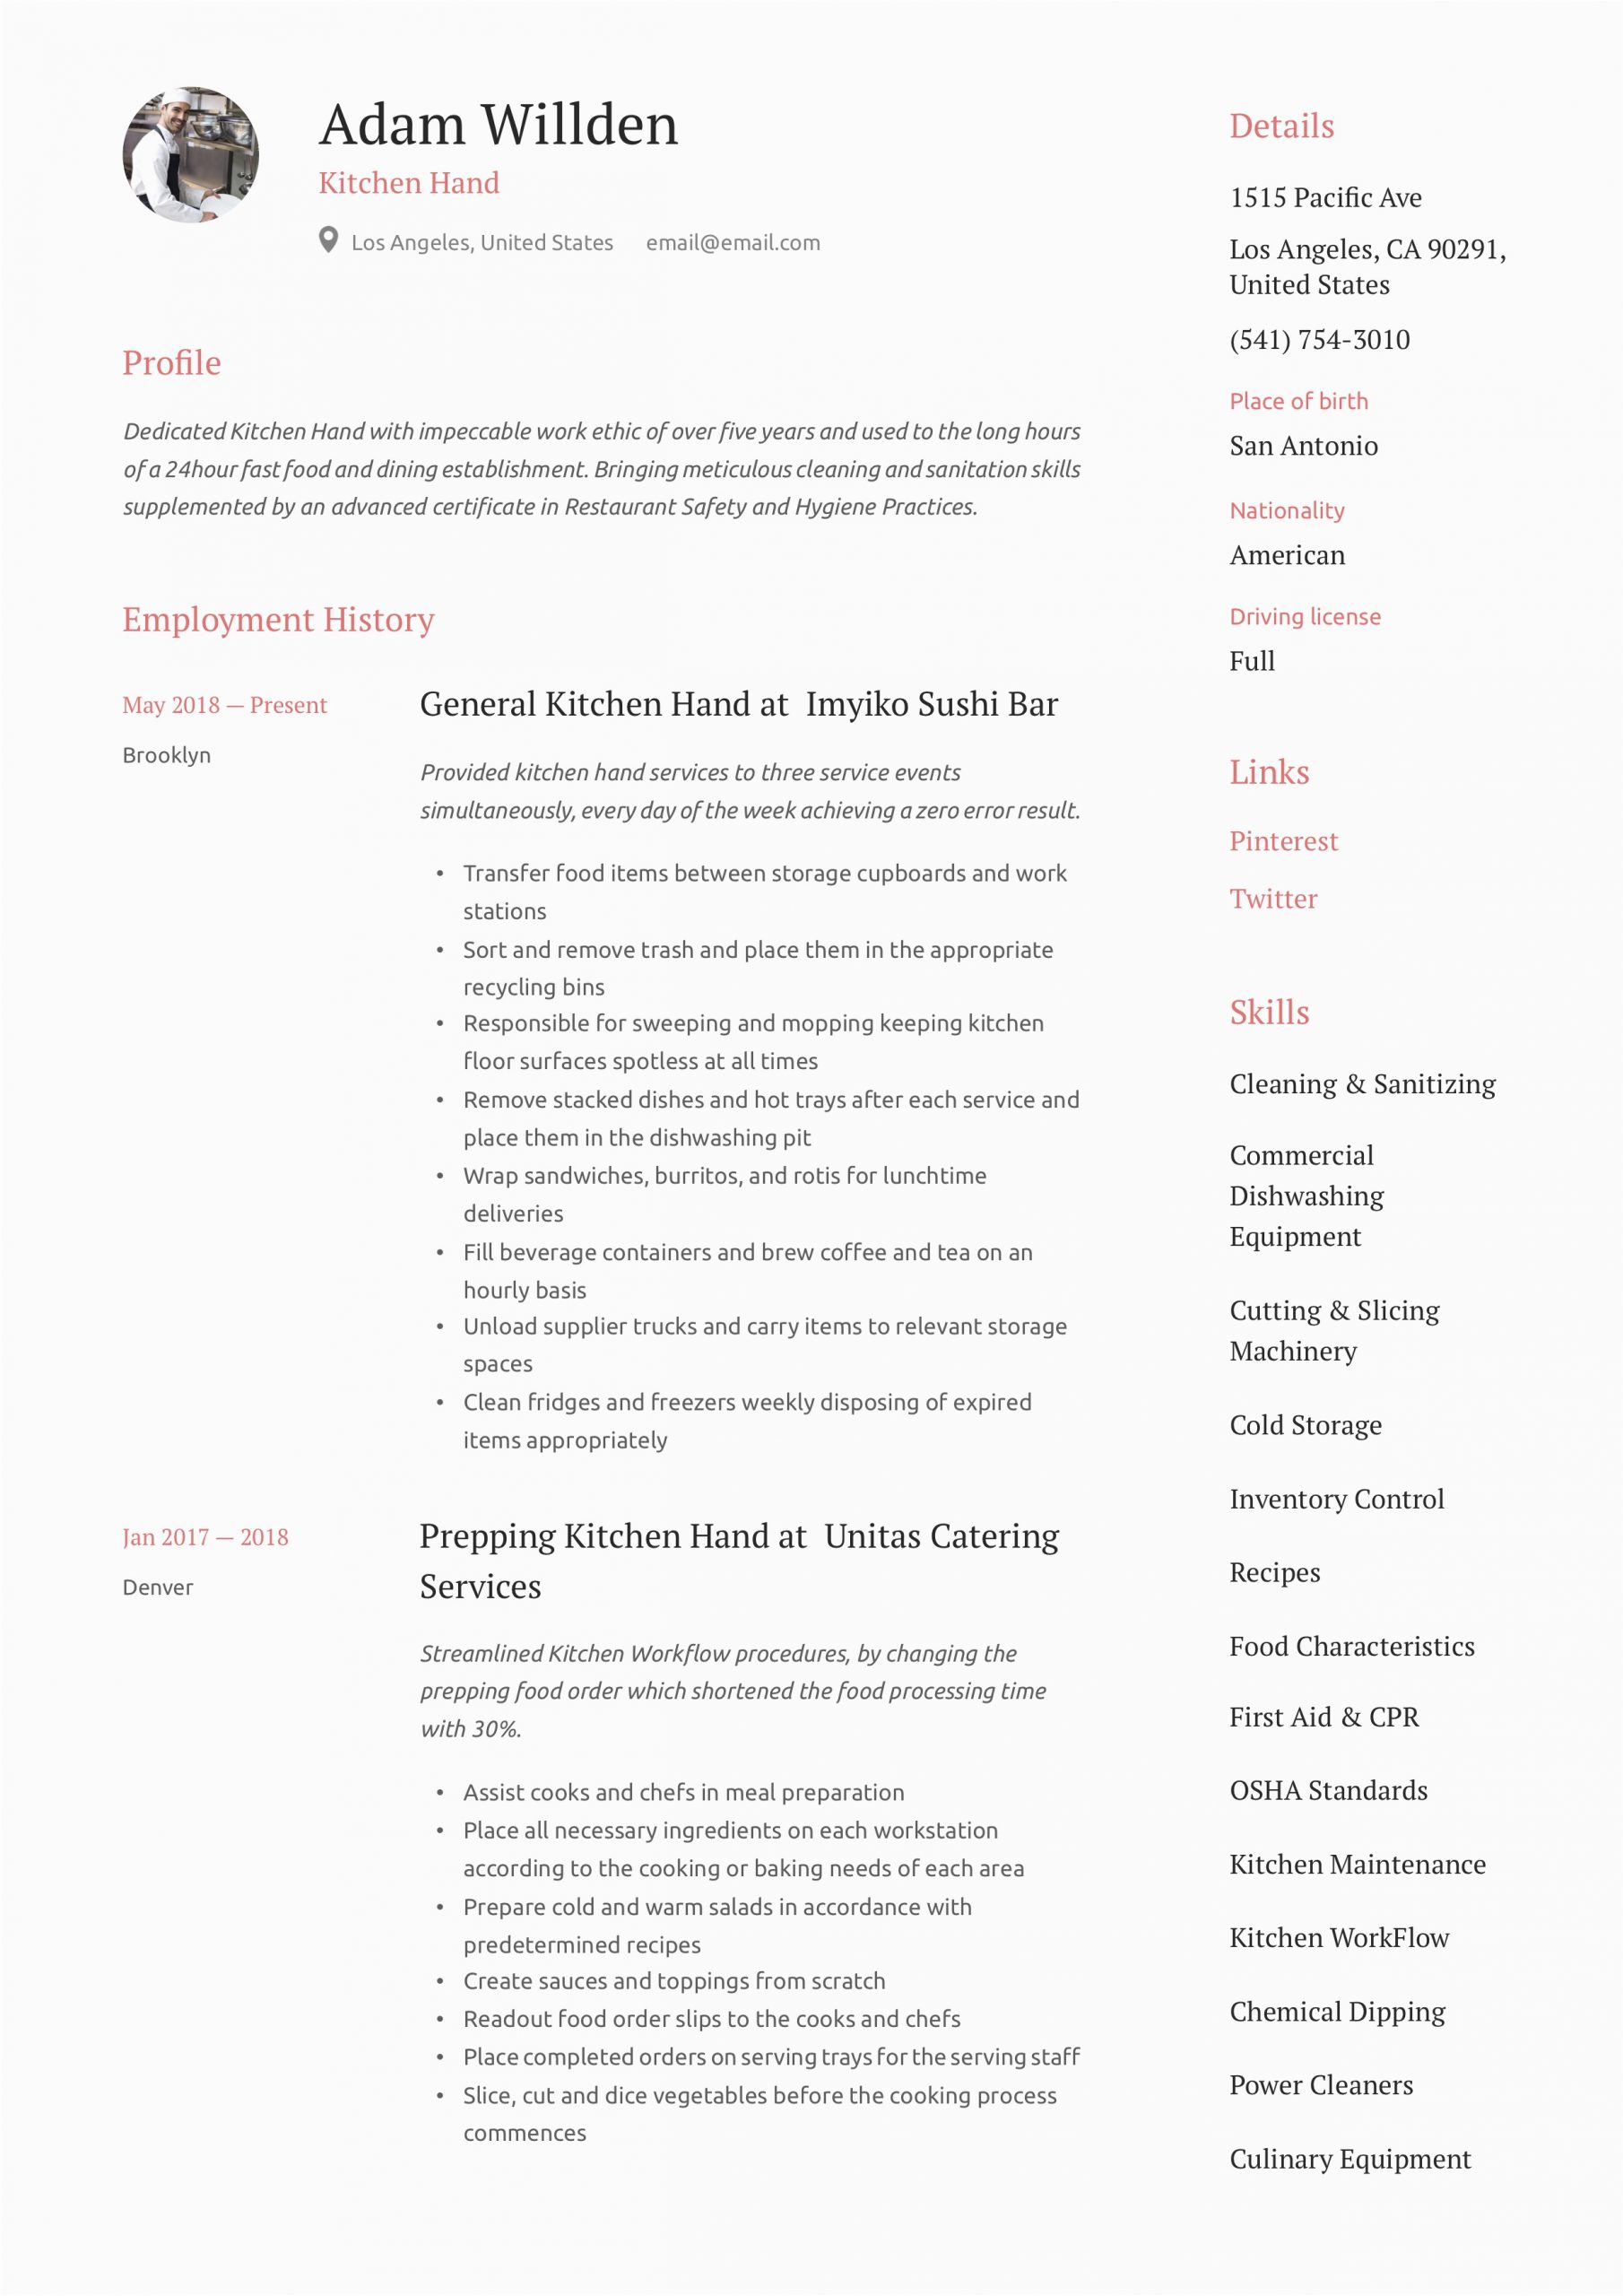 Sample Resume for Restaurant Kitchen Hand Kitchen Hand Resume & Writing Guide